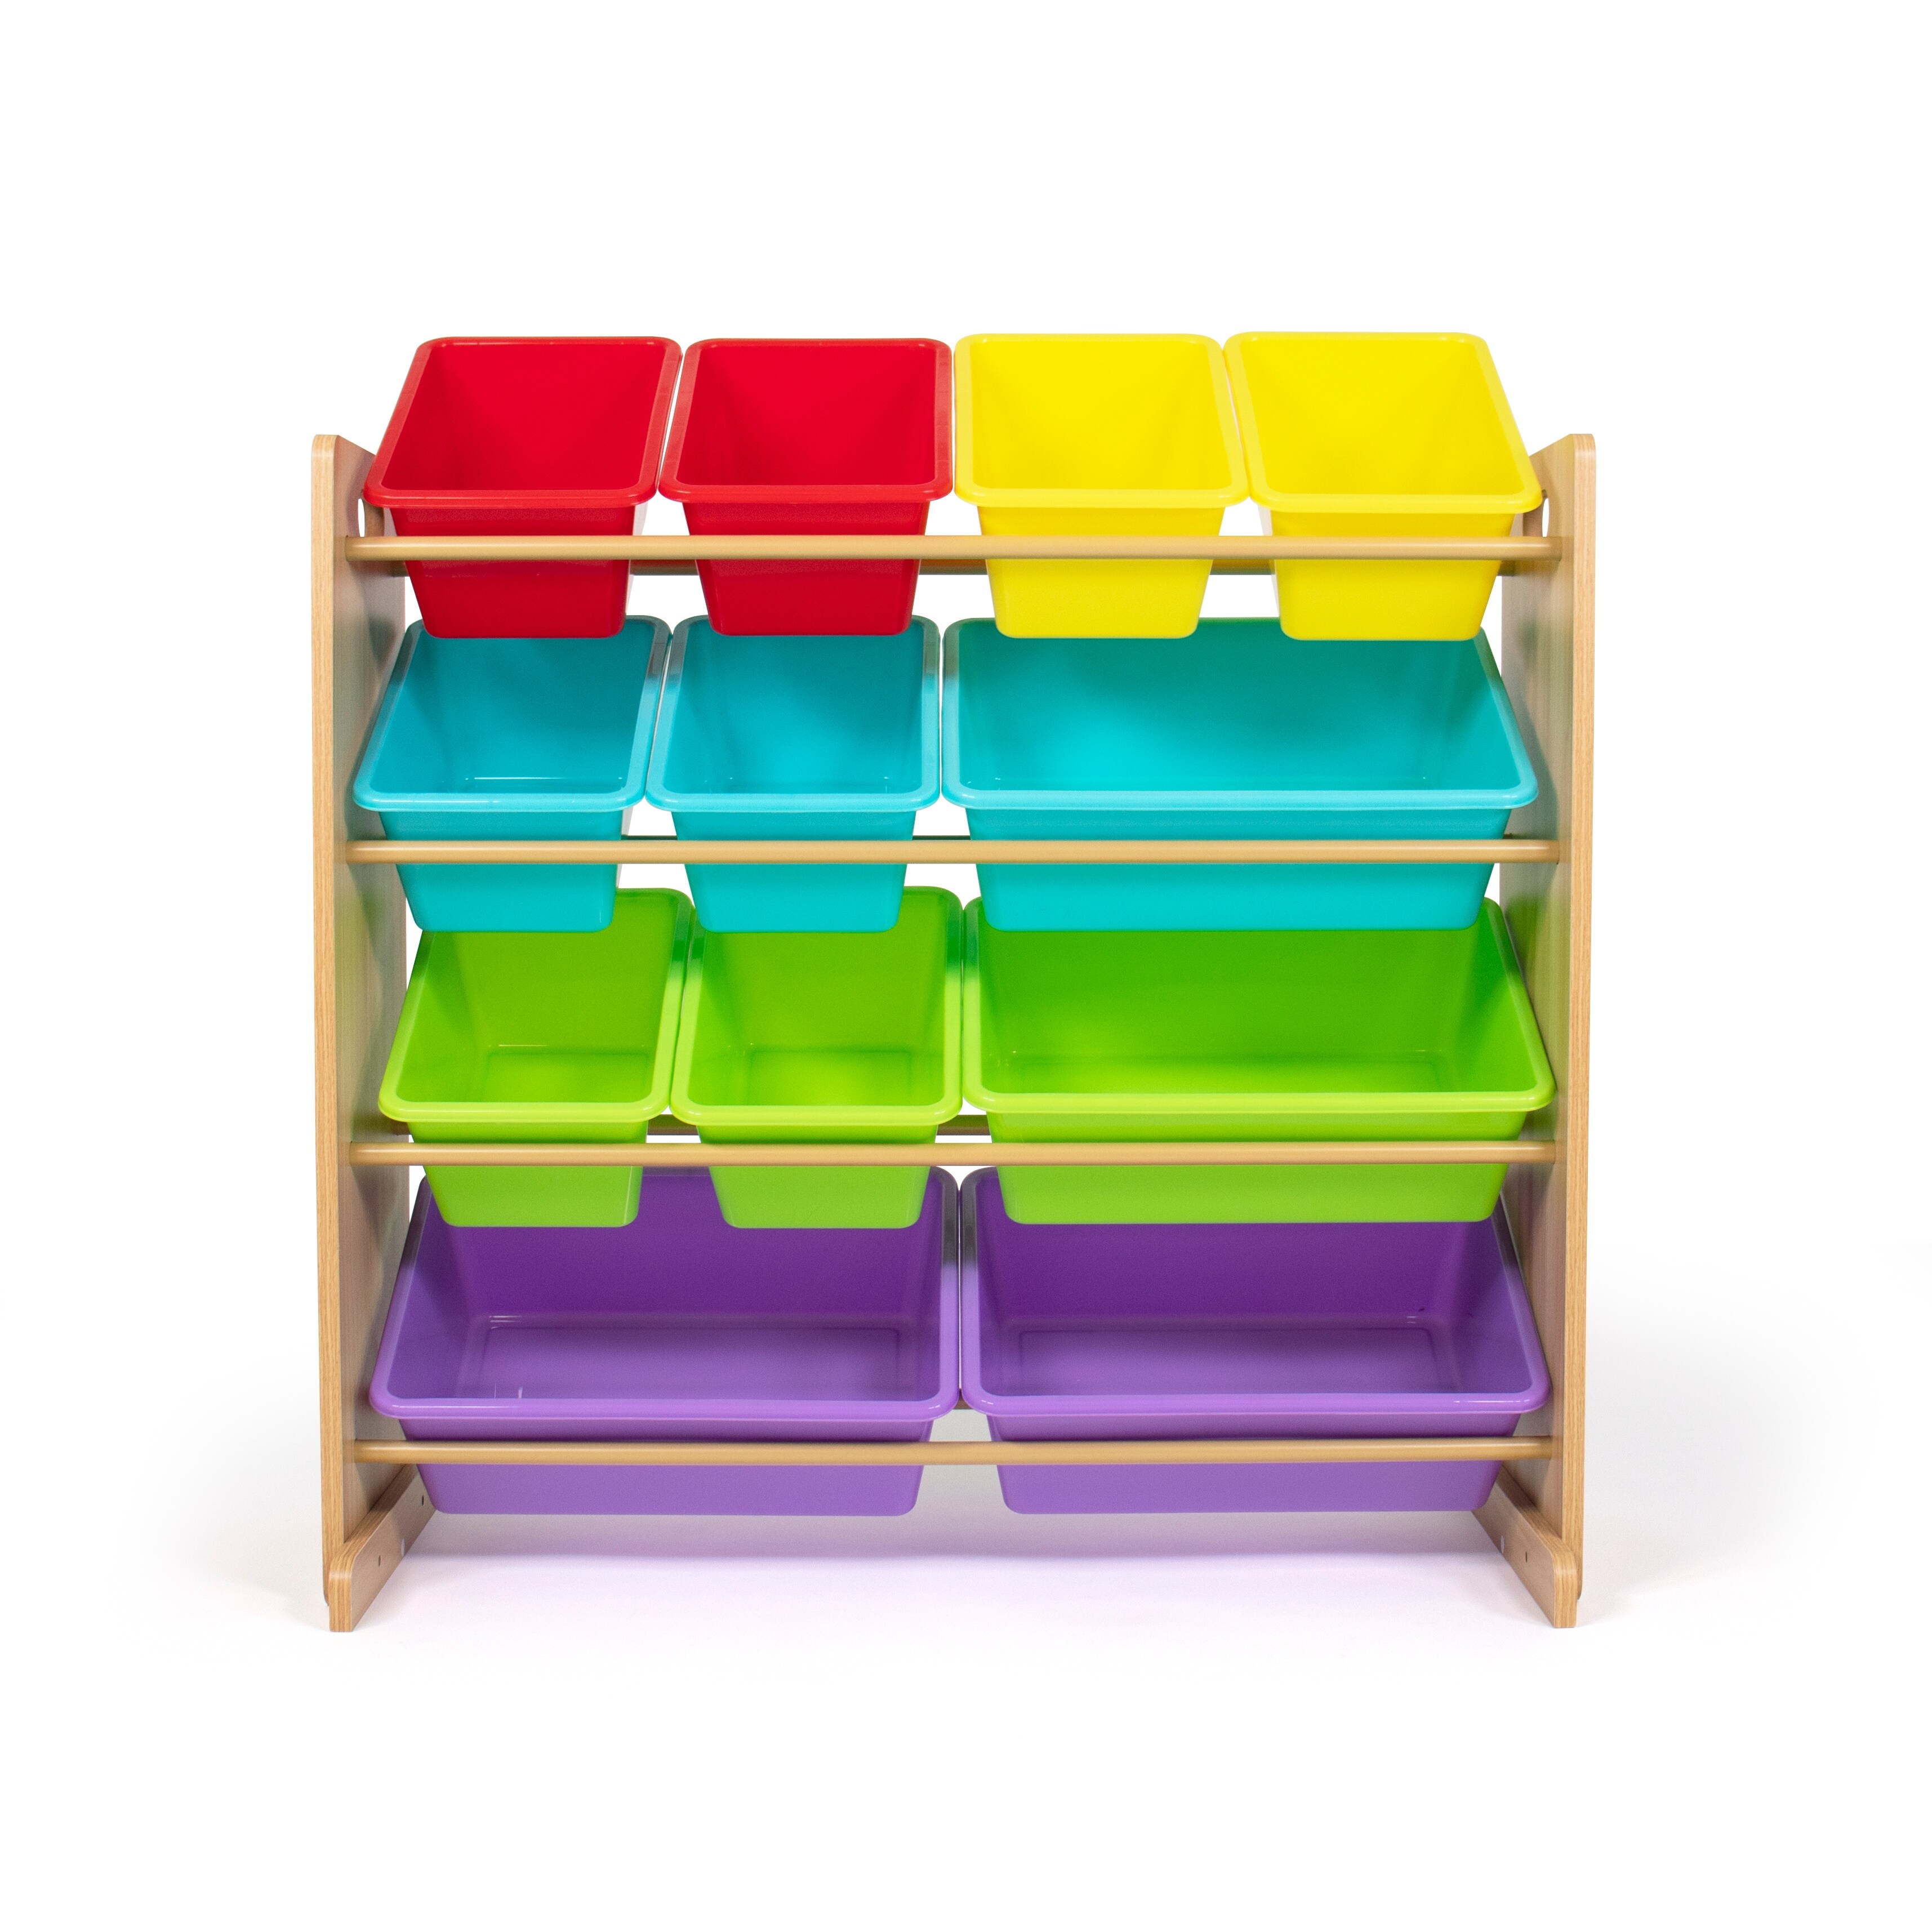 https://ak1.ostkcdn.com/images/products/is/images/direct/1ad17df9b6147f3dedb19f4ecb23b33b214d70fb/Rainbow-Kids-Toy-Storage-Organizer-with-12-Storage-Bins.jpg